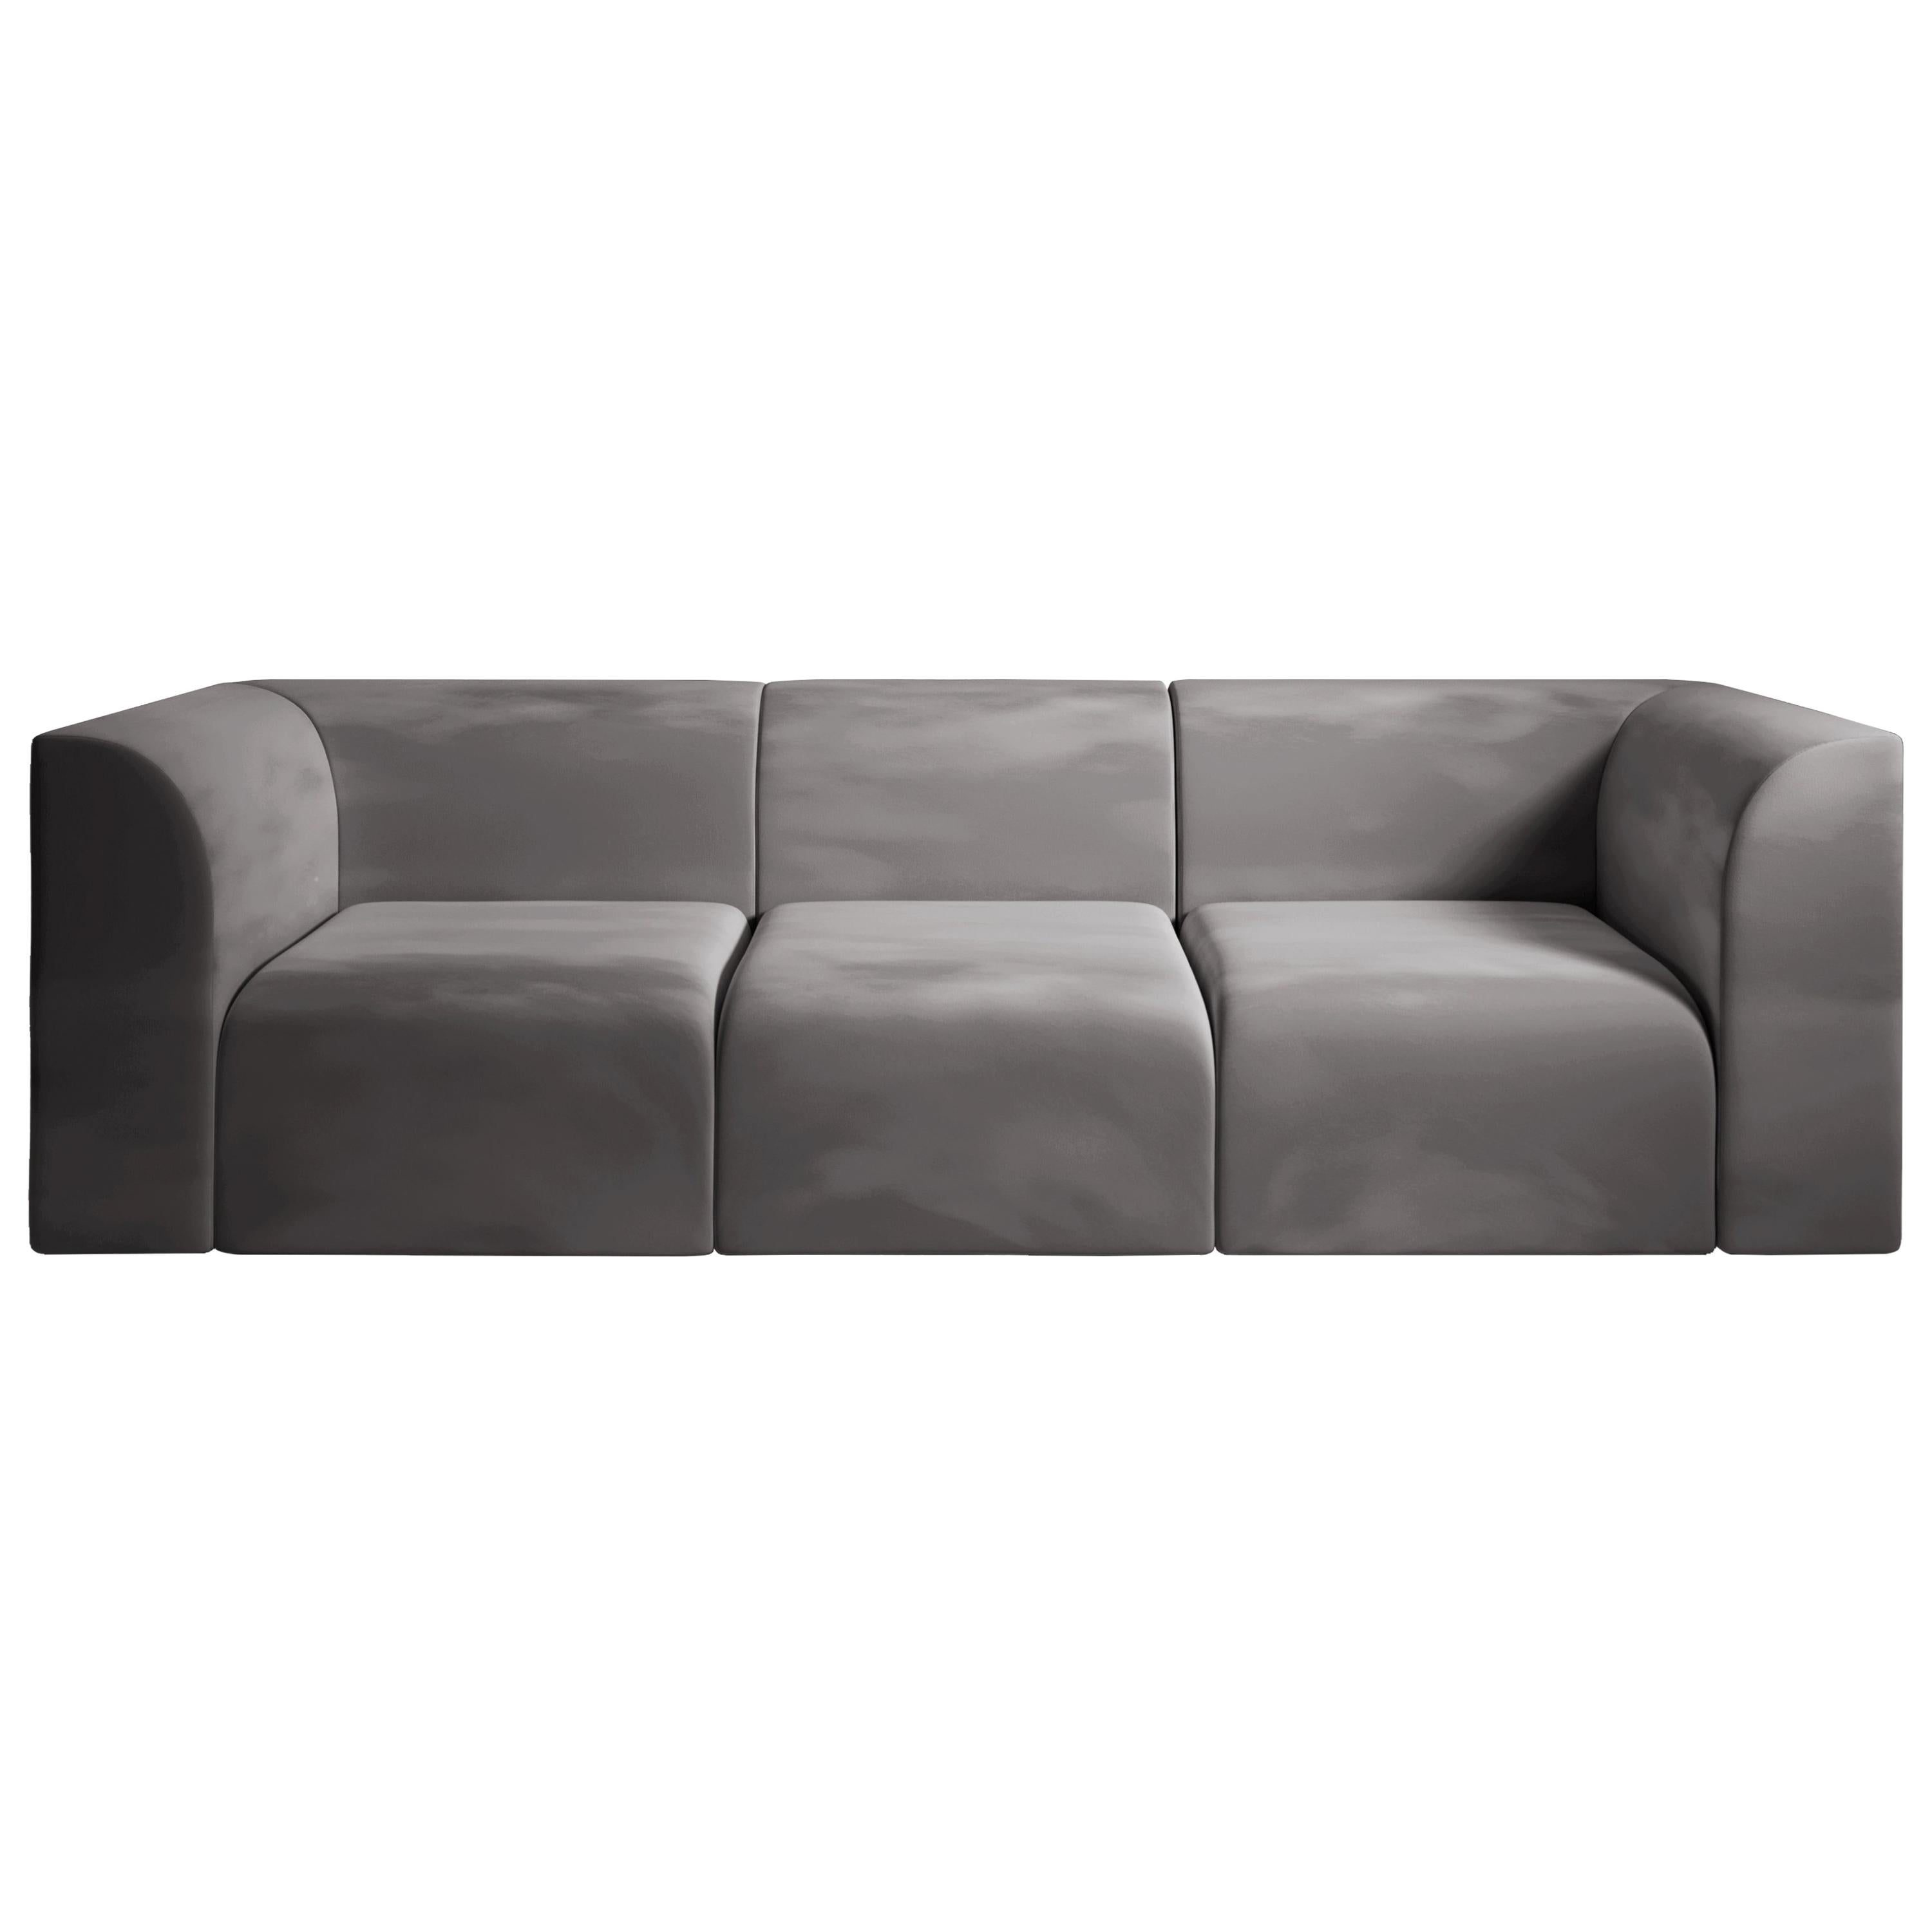 Archi 3-Seat Contemporary Sofa in Fabric For Sale